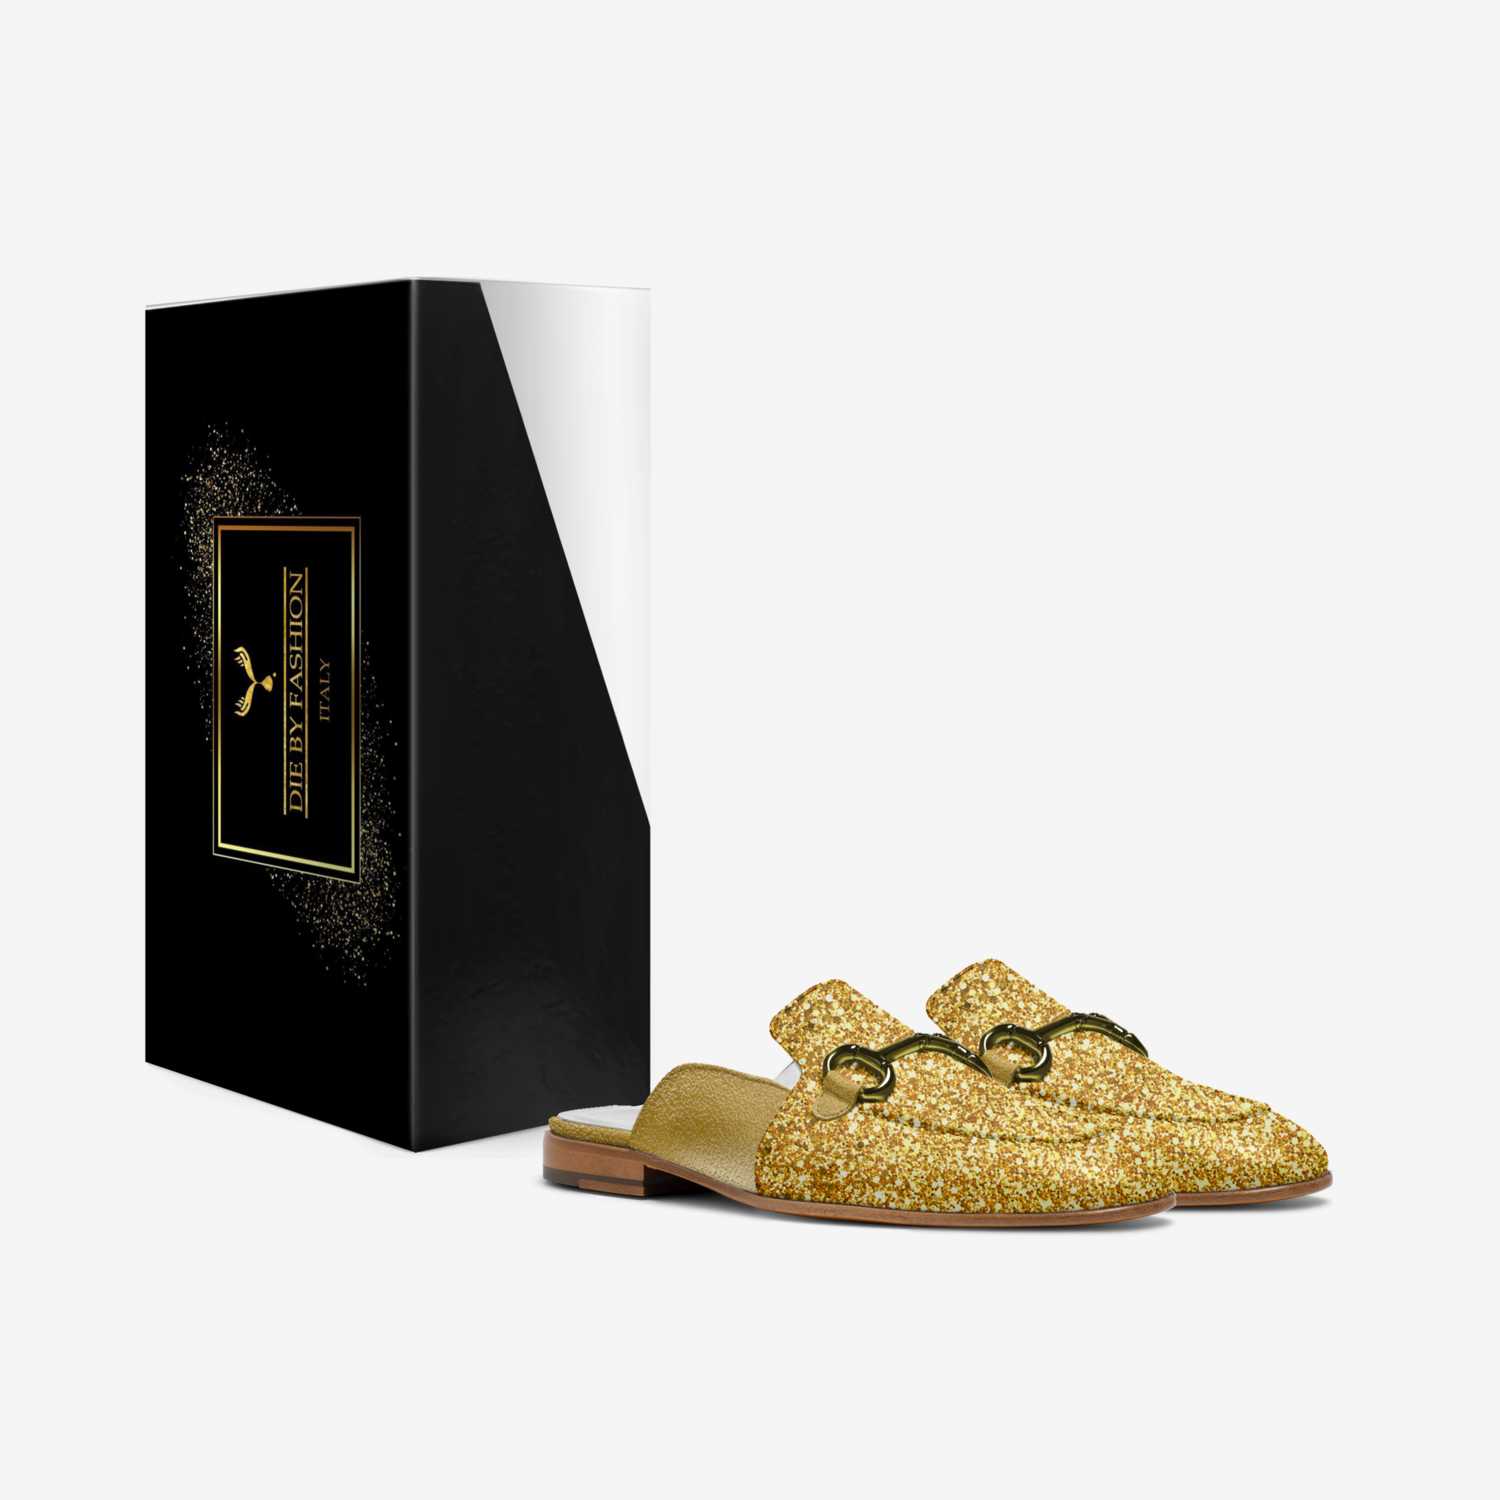 Infinite Sparkle custom made in Italy shoes by Rasheeda Socolove | Box view